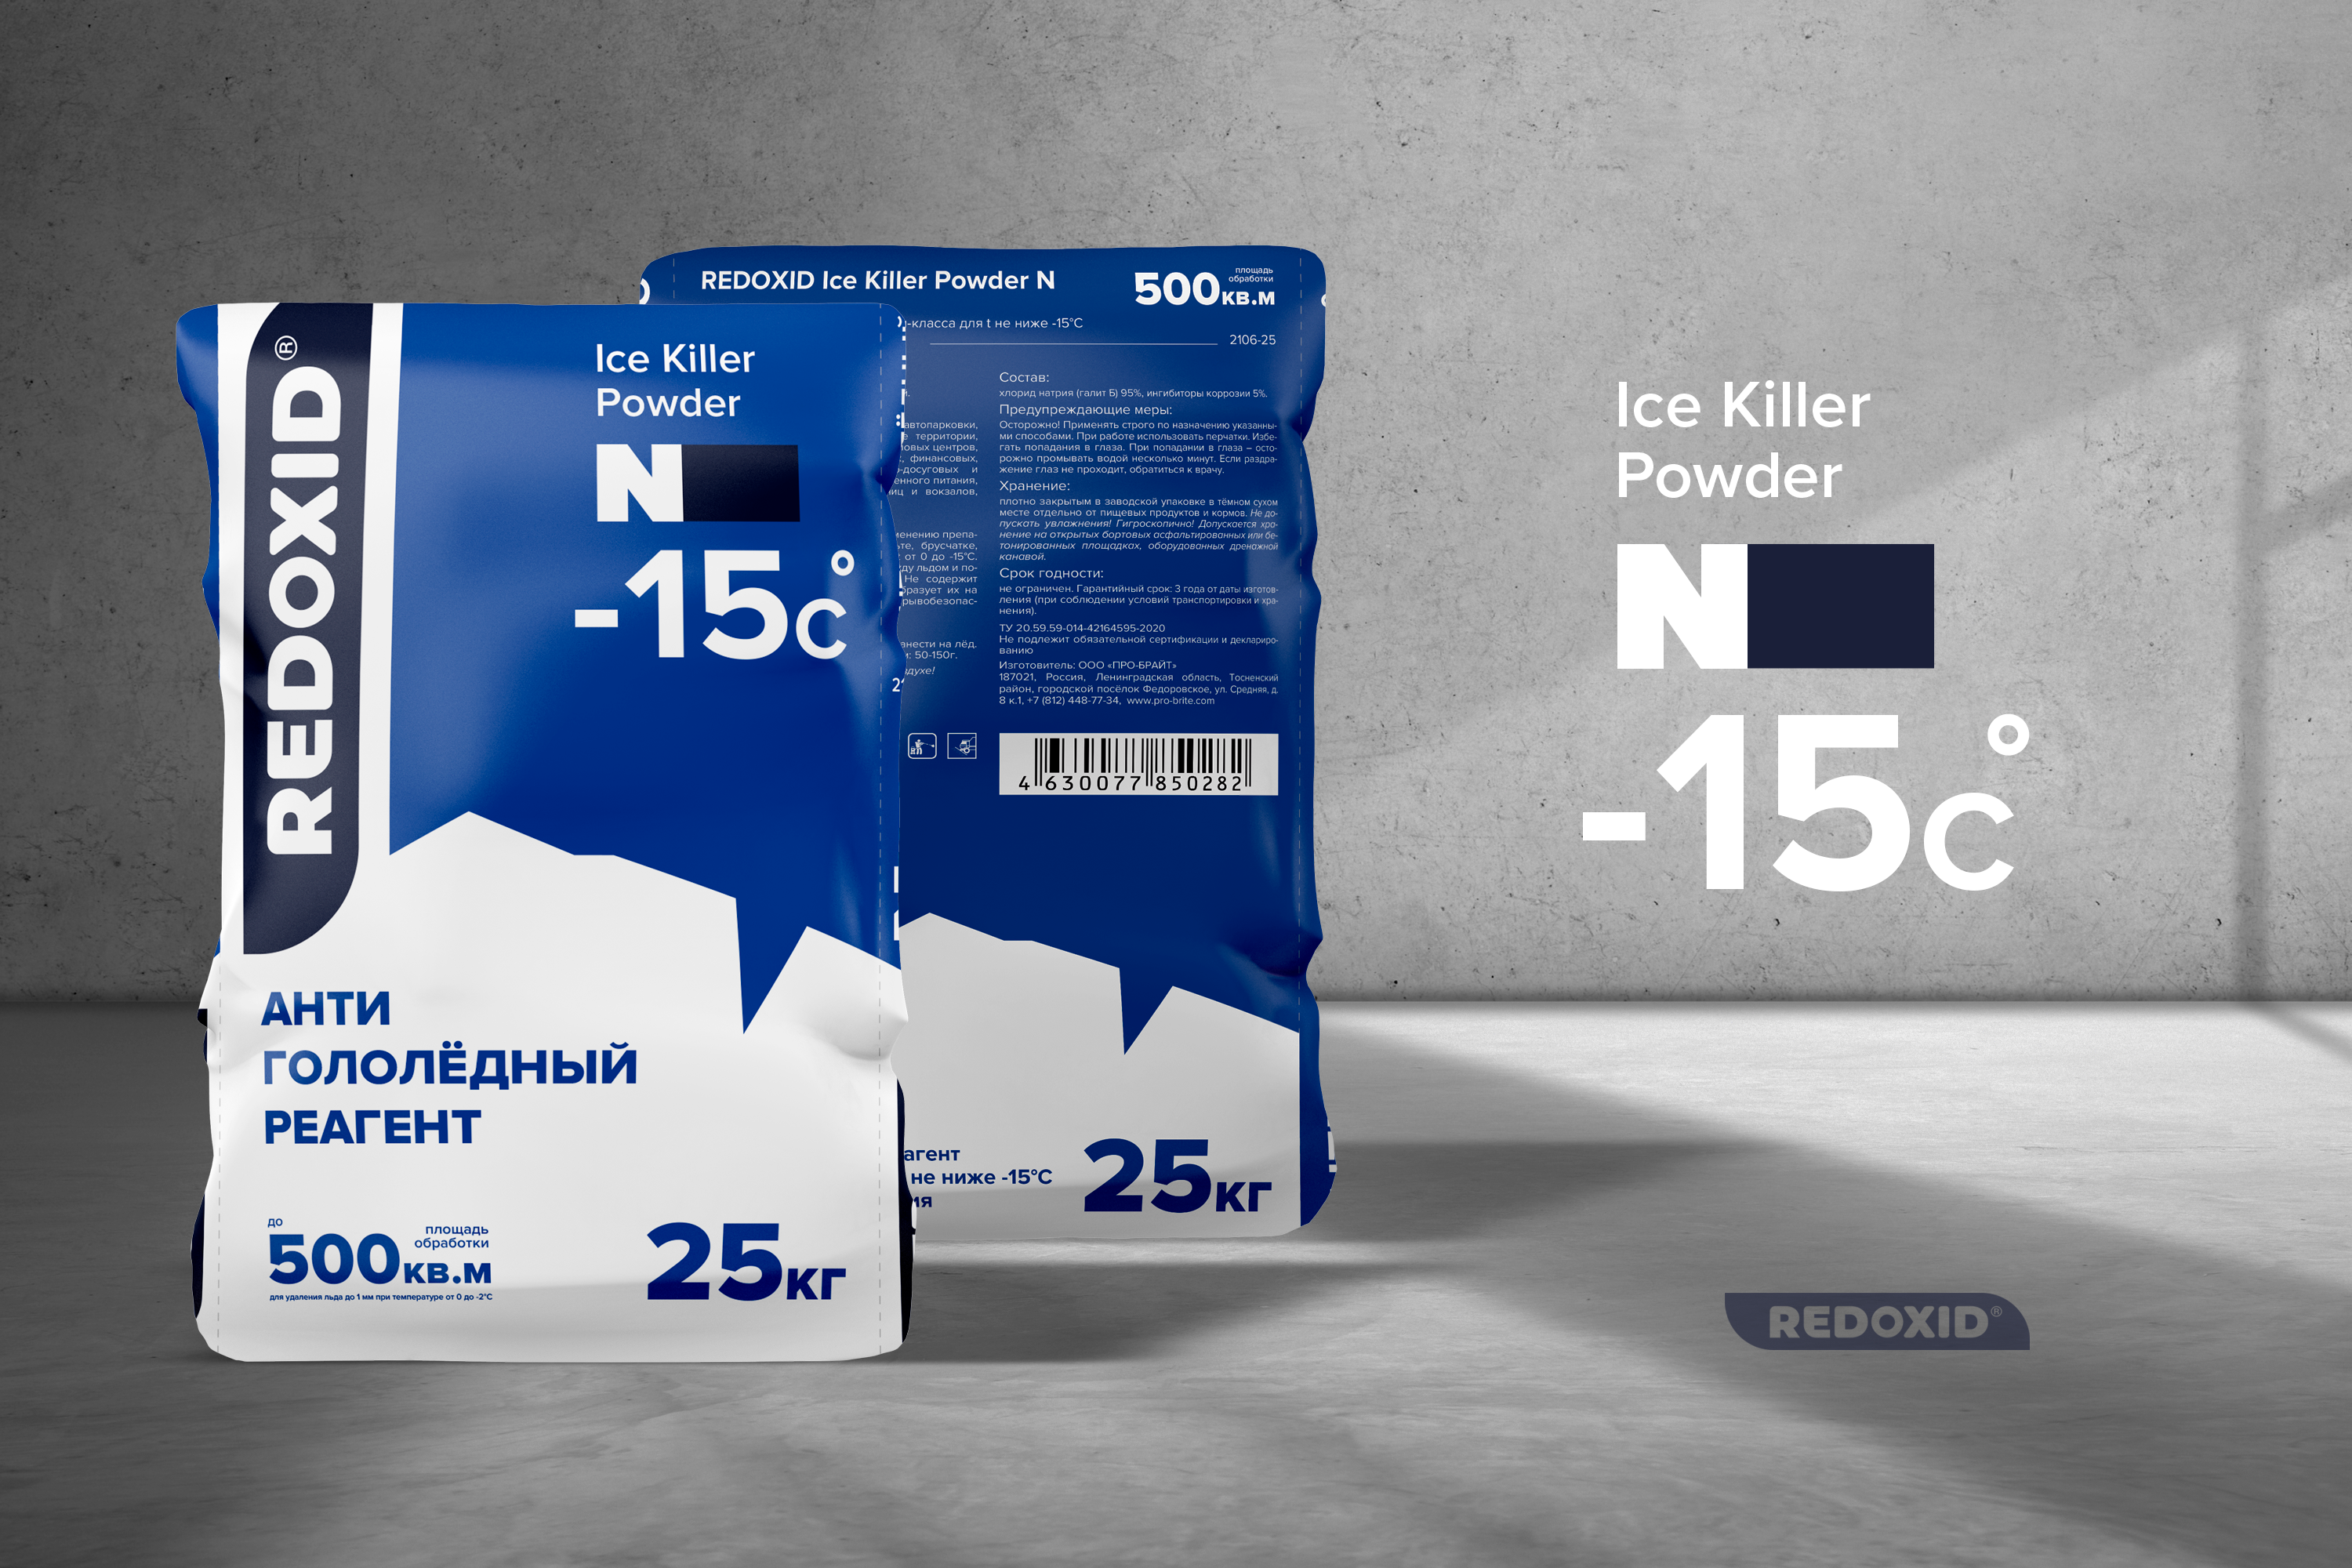 Ice Killer Powder n 25кг. Антигололедный реагент гранул.ICEKILLER Powder Mix Mix Powder Pro-Brite 25кг. Айс киллер противогололедный реагент. Redoxid реагент. Powder killer